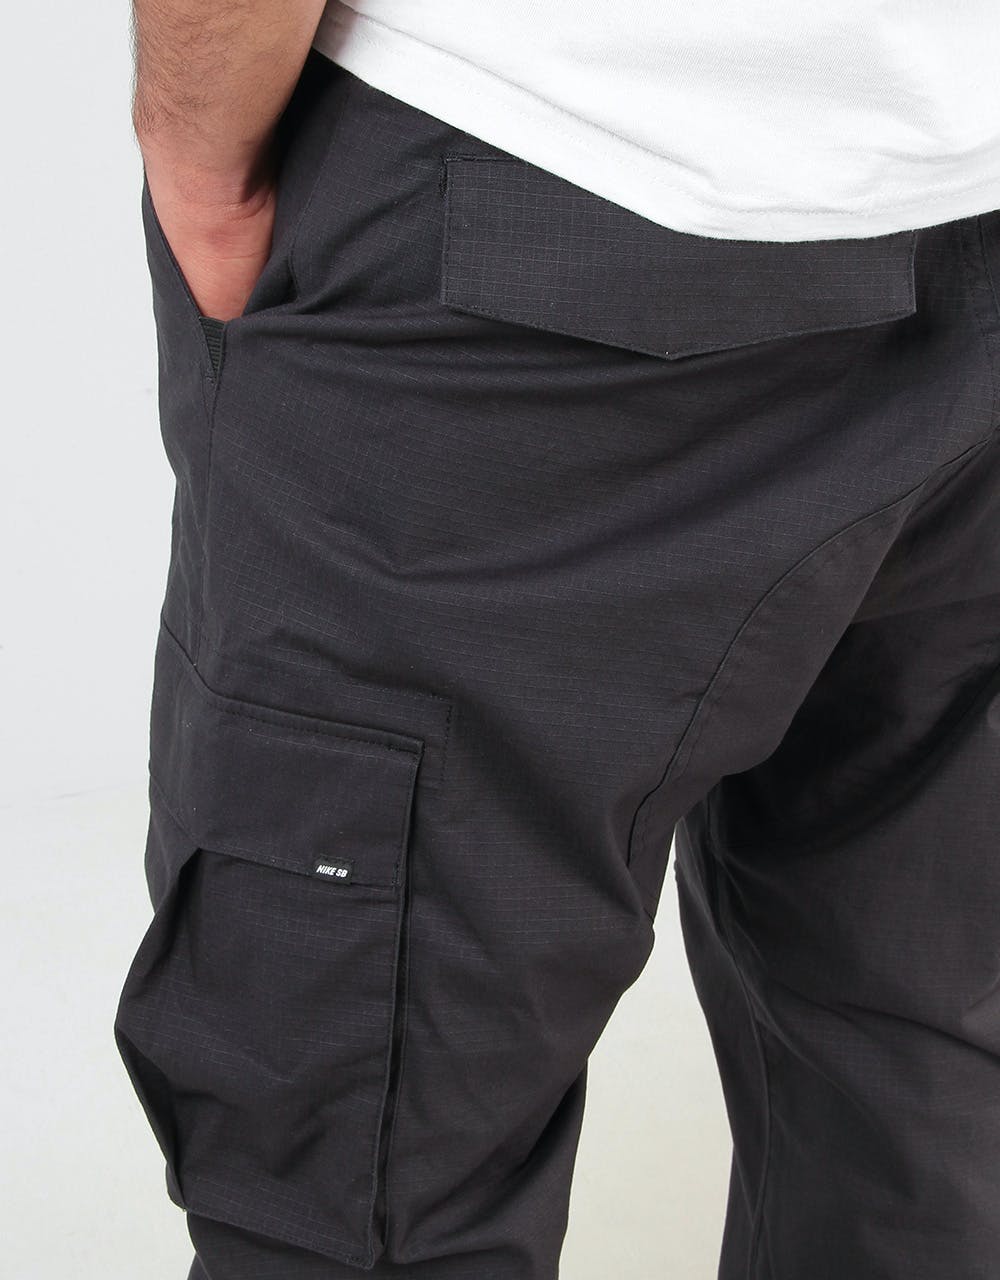 Nike SB FLX FTM Cargo Pant - Black